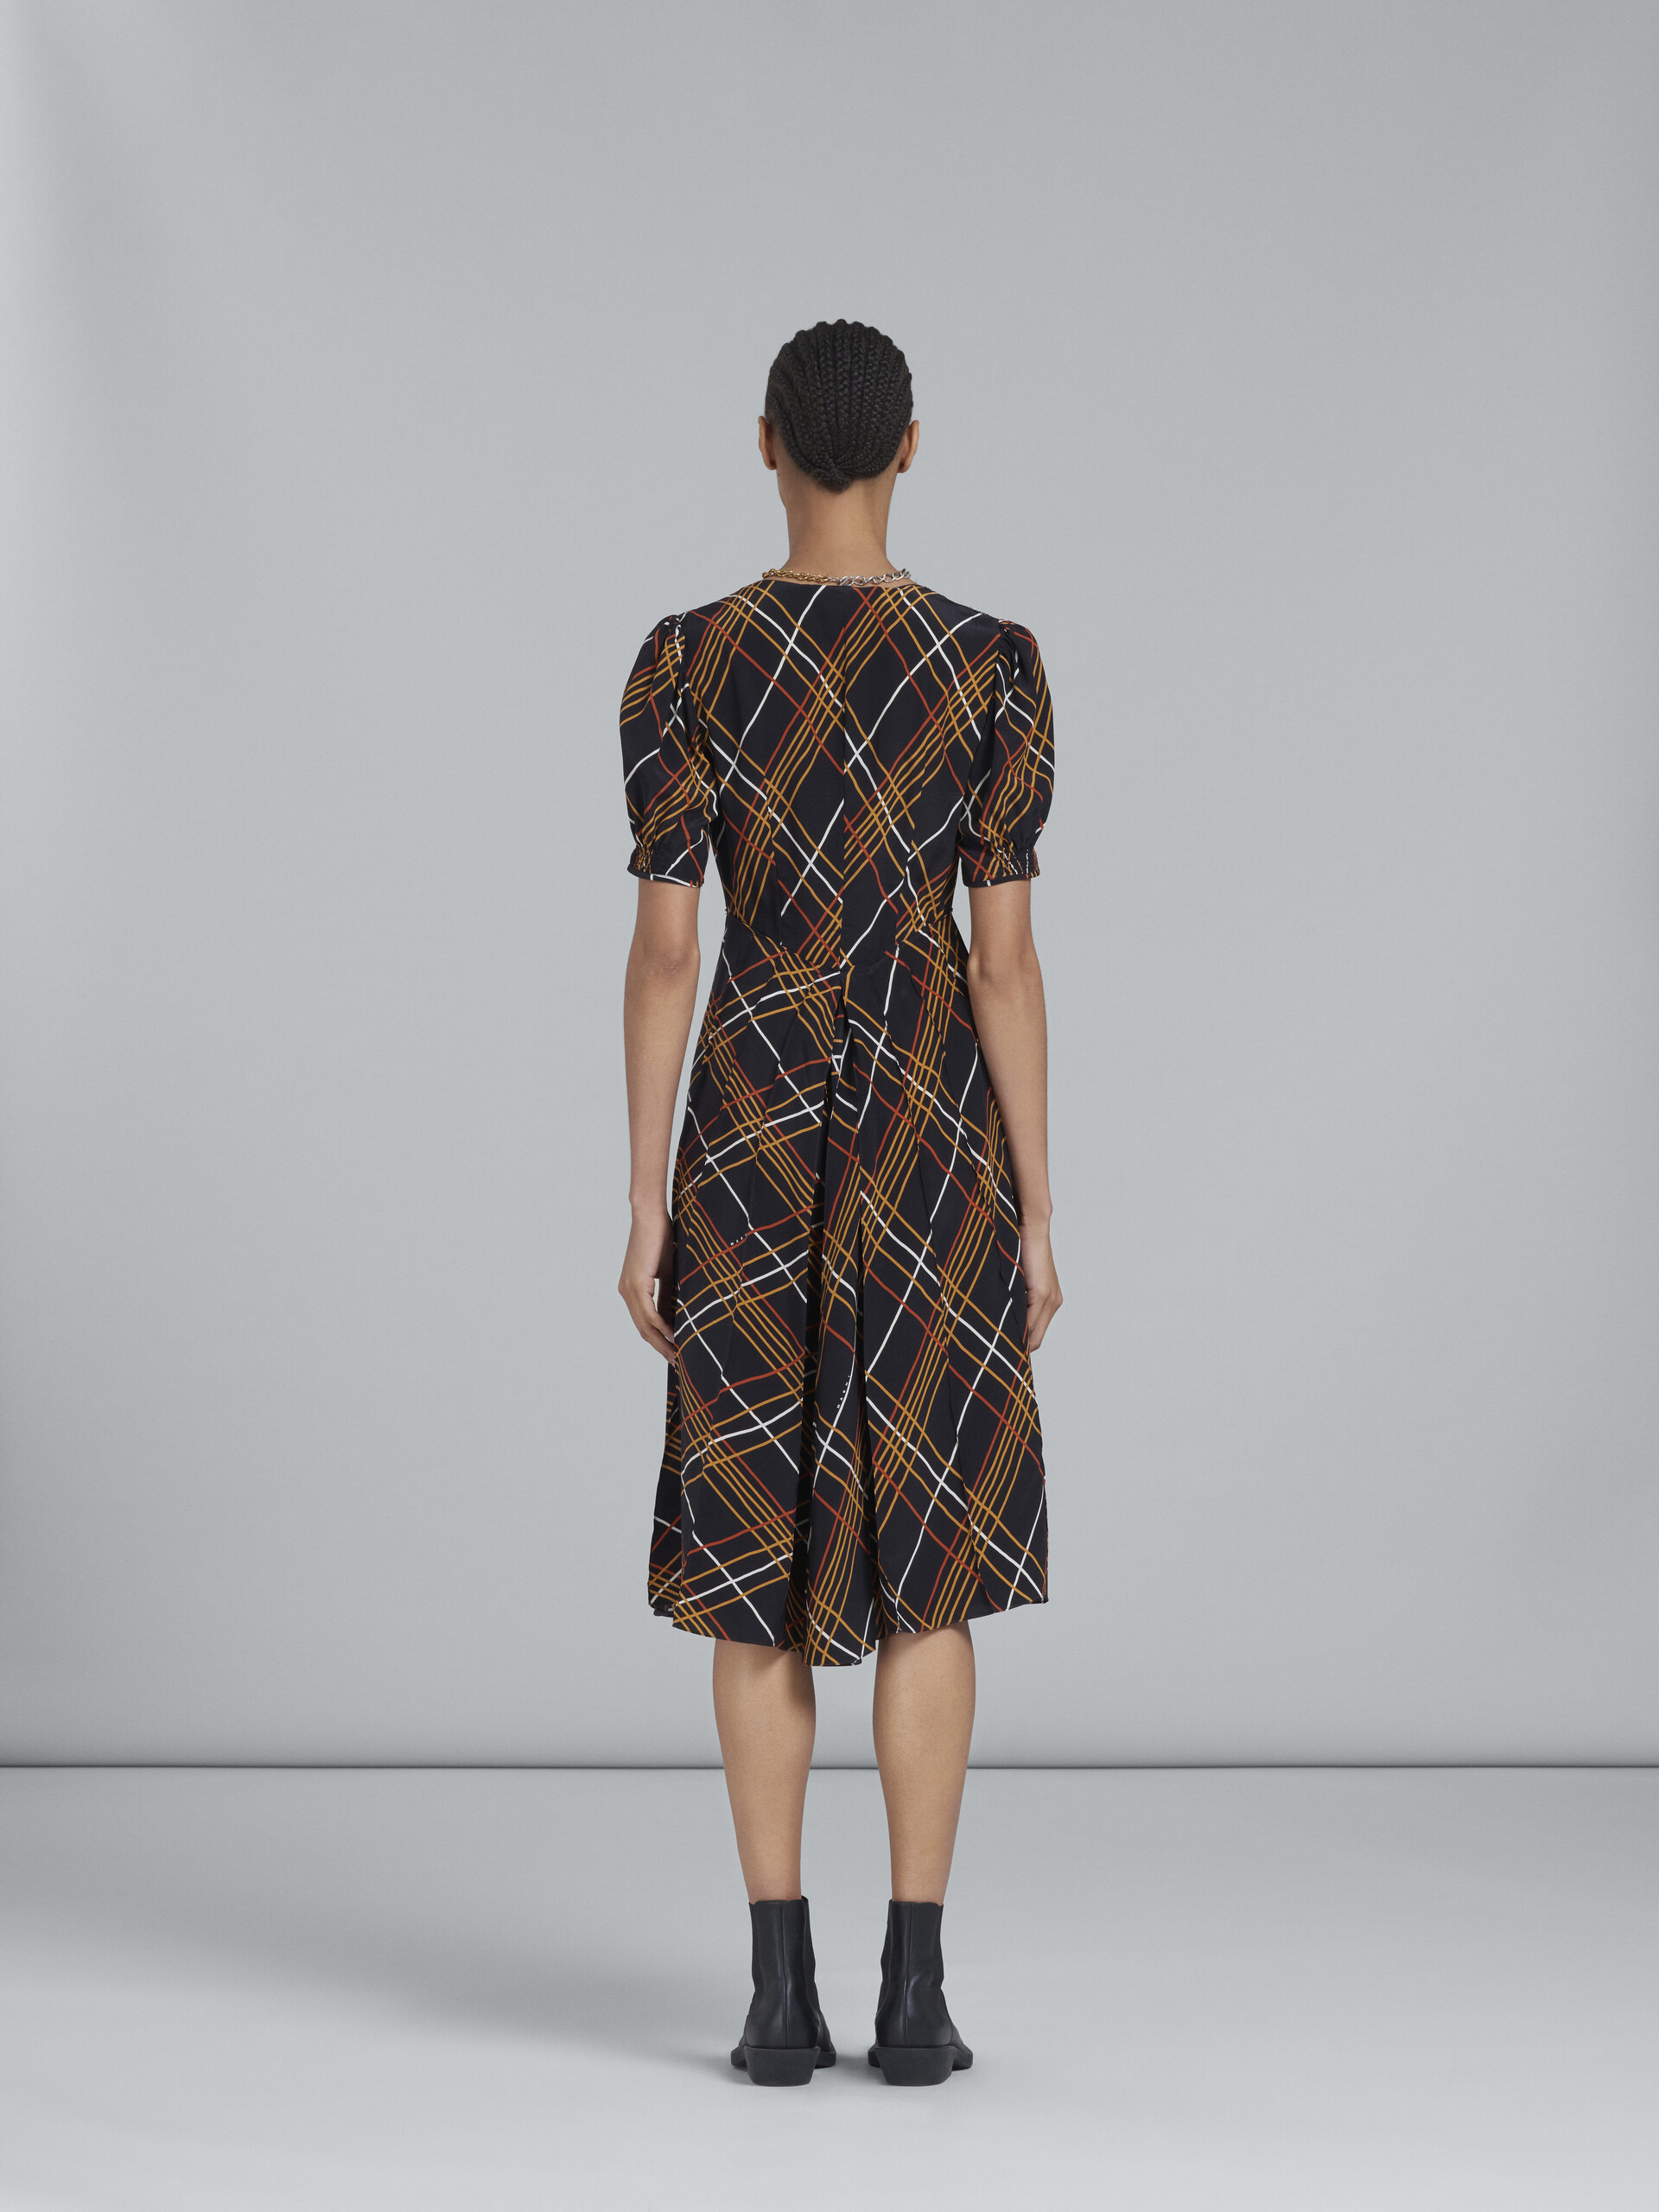 Wild Roads print silk dress - Dresses - Image 3